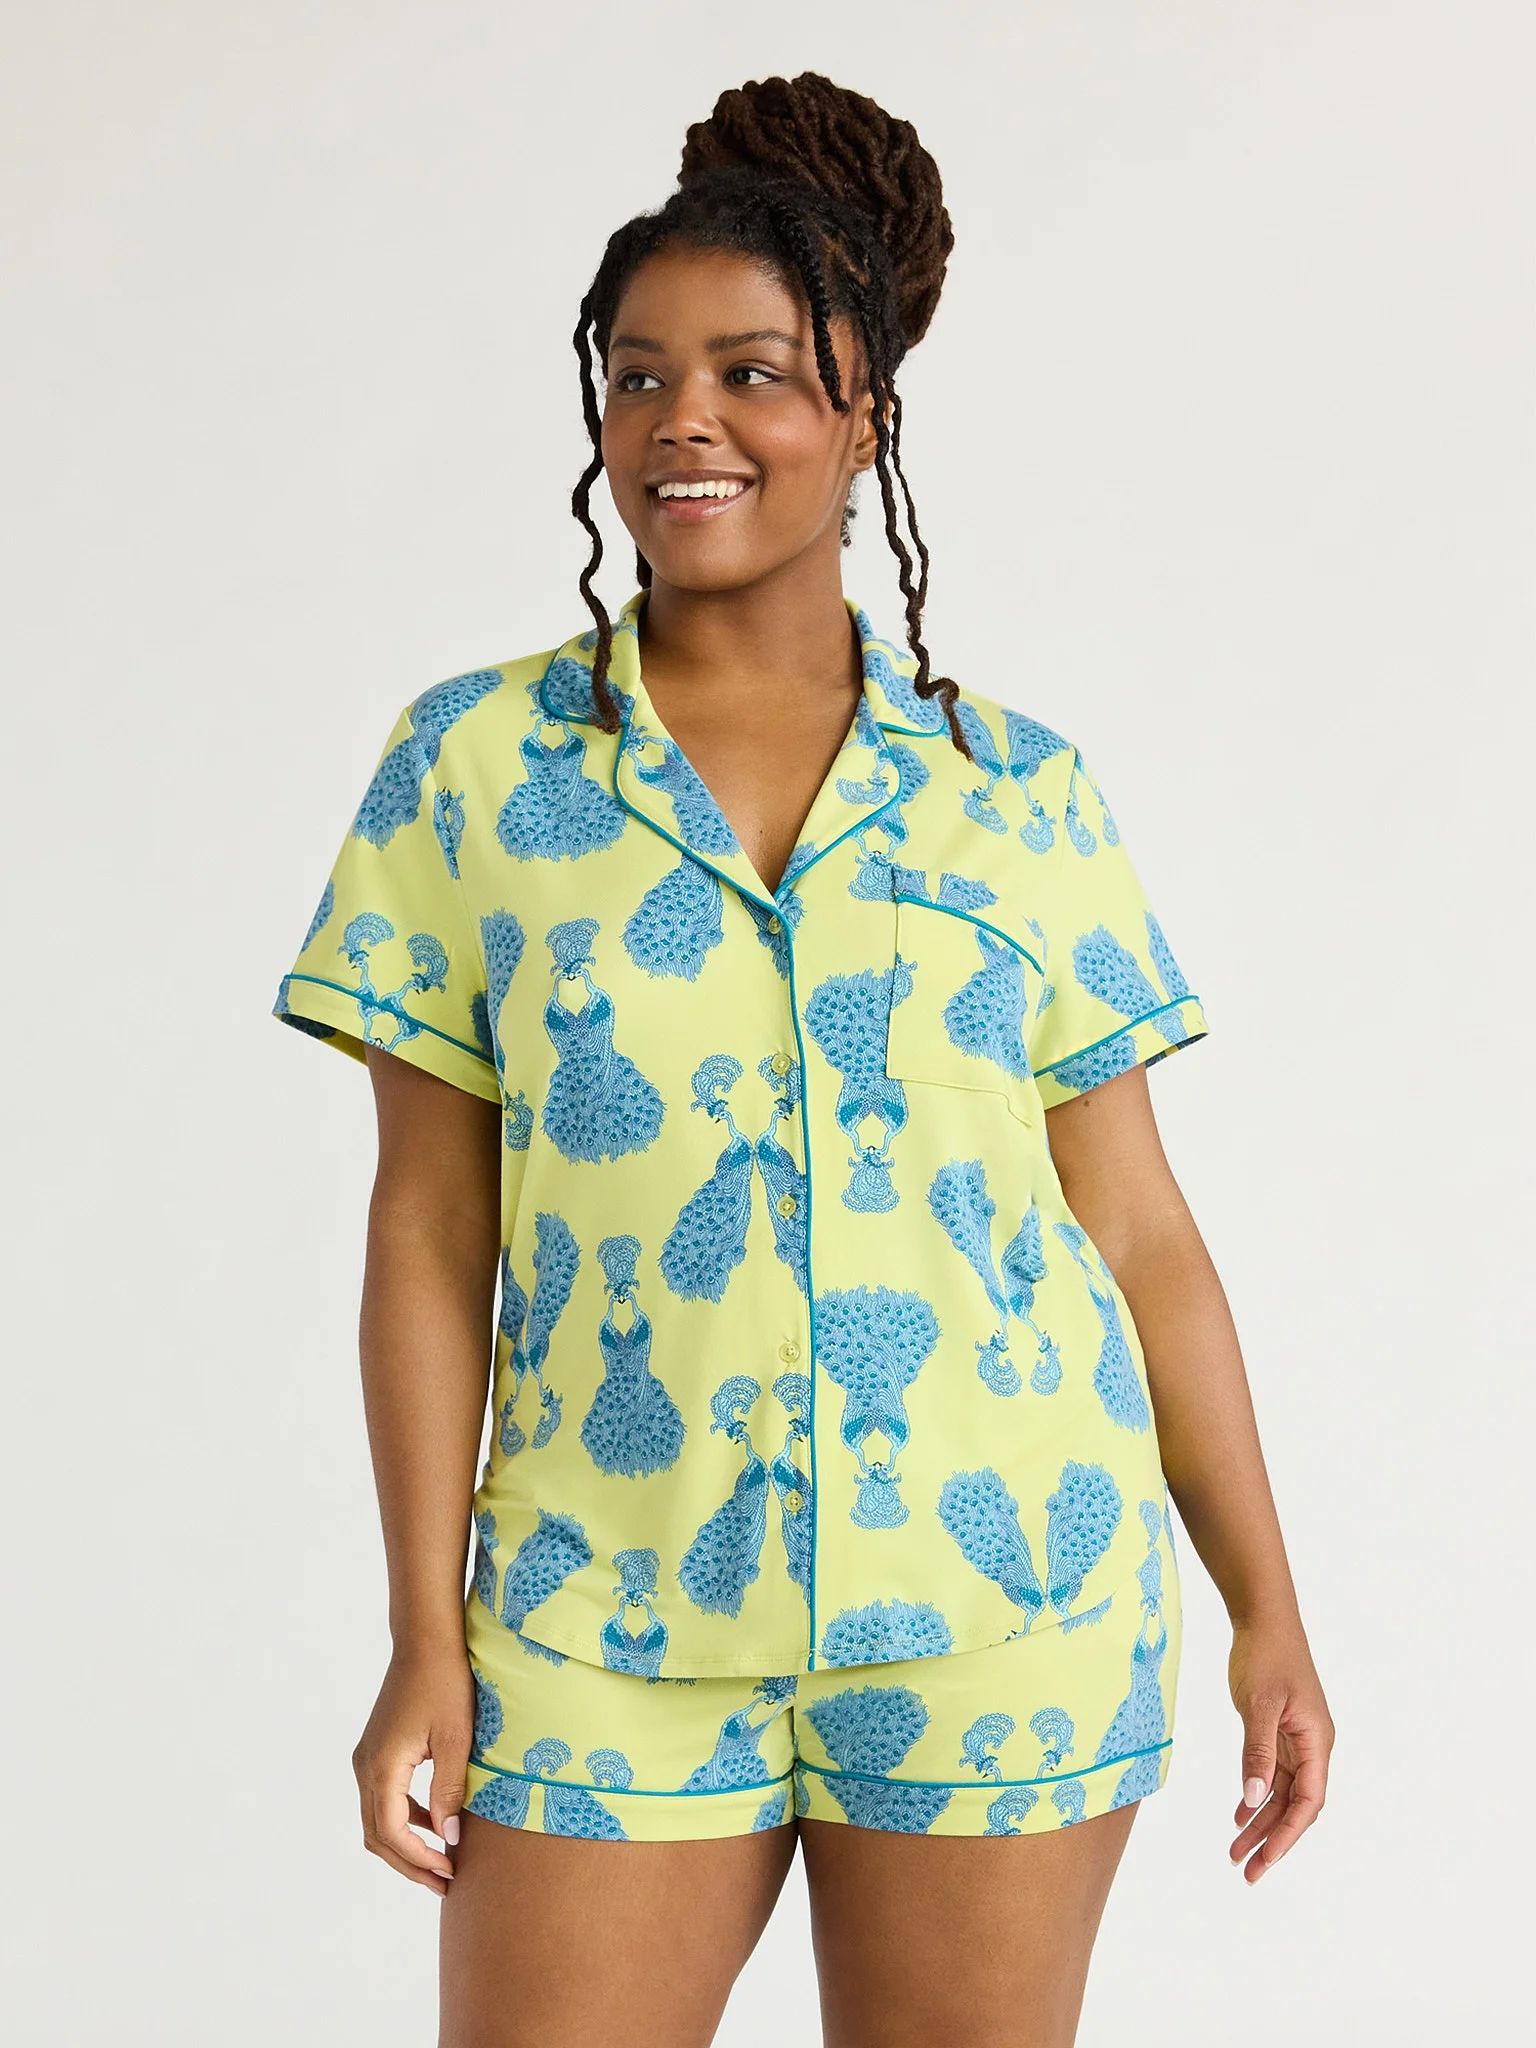 Joyspun Women's Knit Notch Collar Top and Shorts Pajama Set, 2-Piece, Sizes S to 3X | Walmart (US)